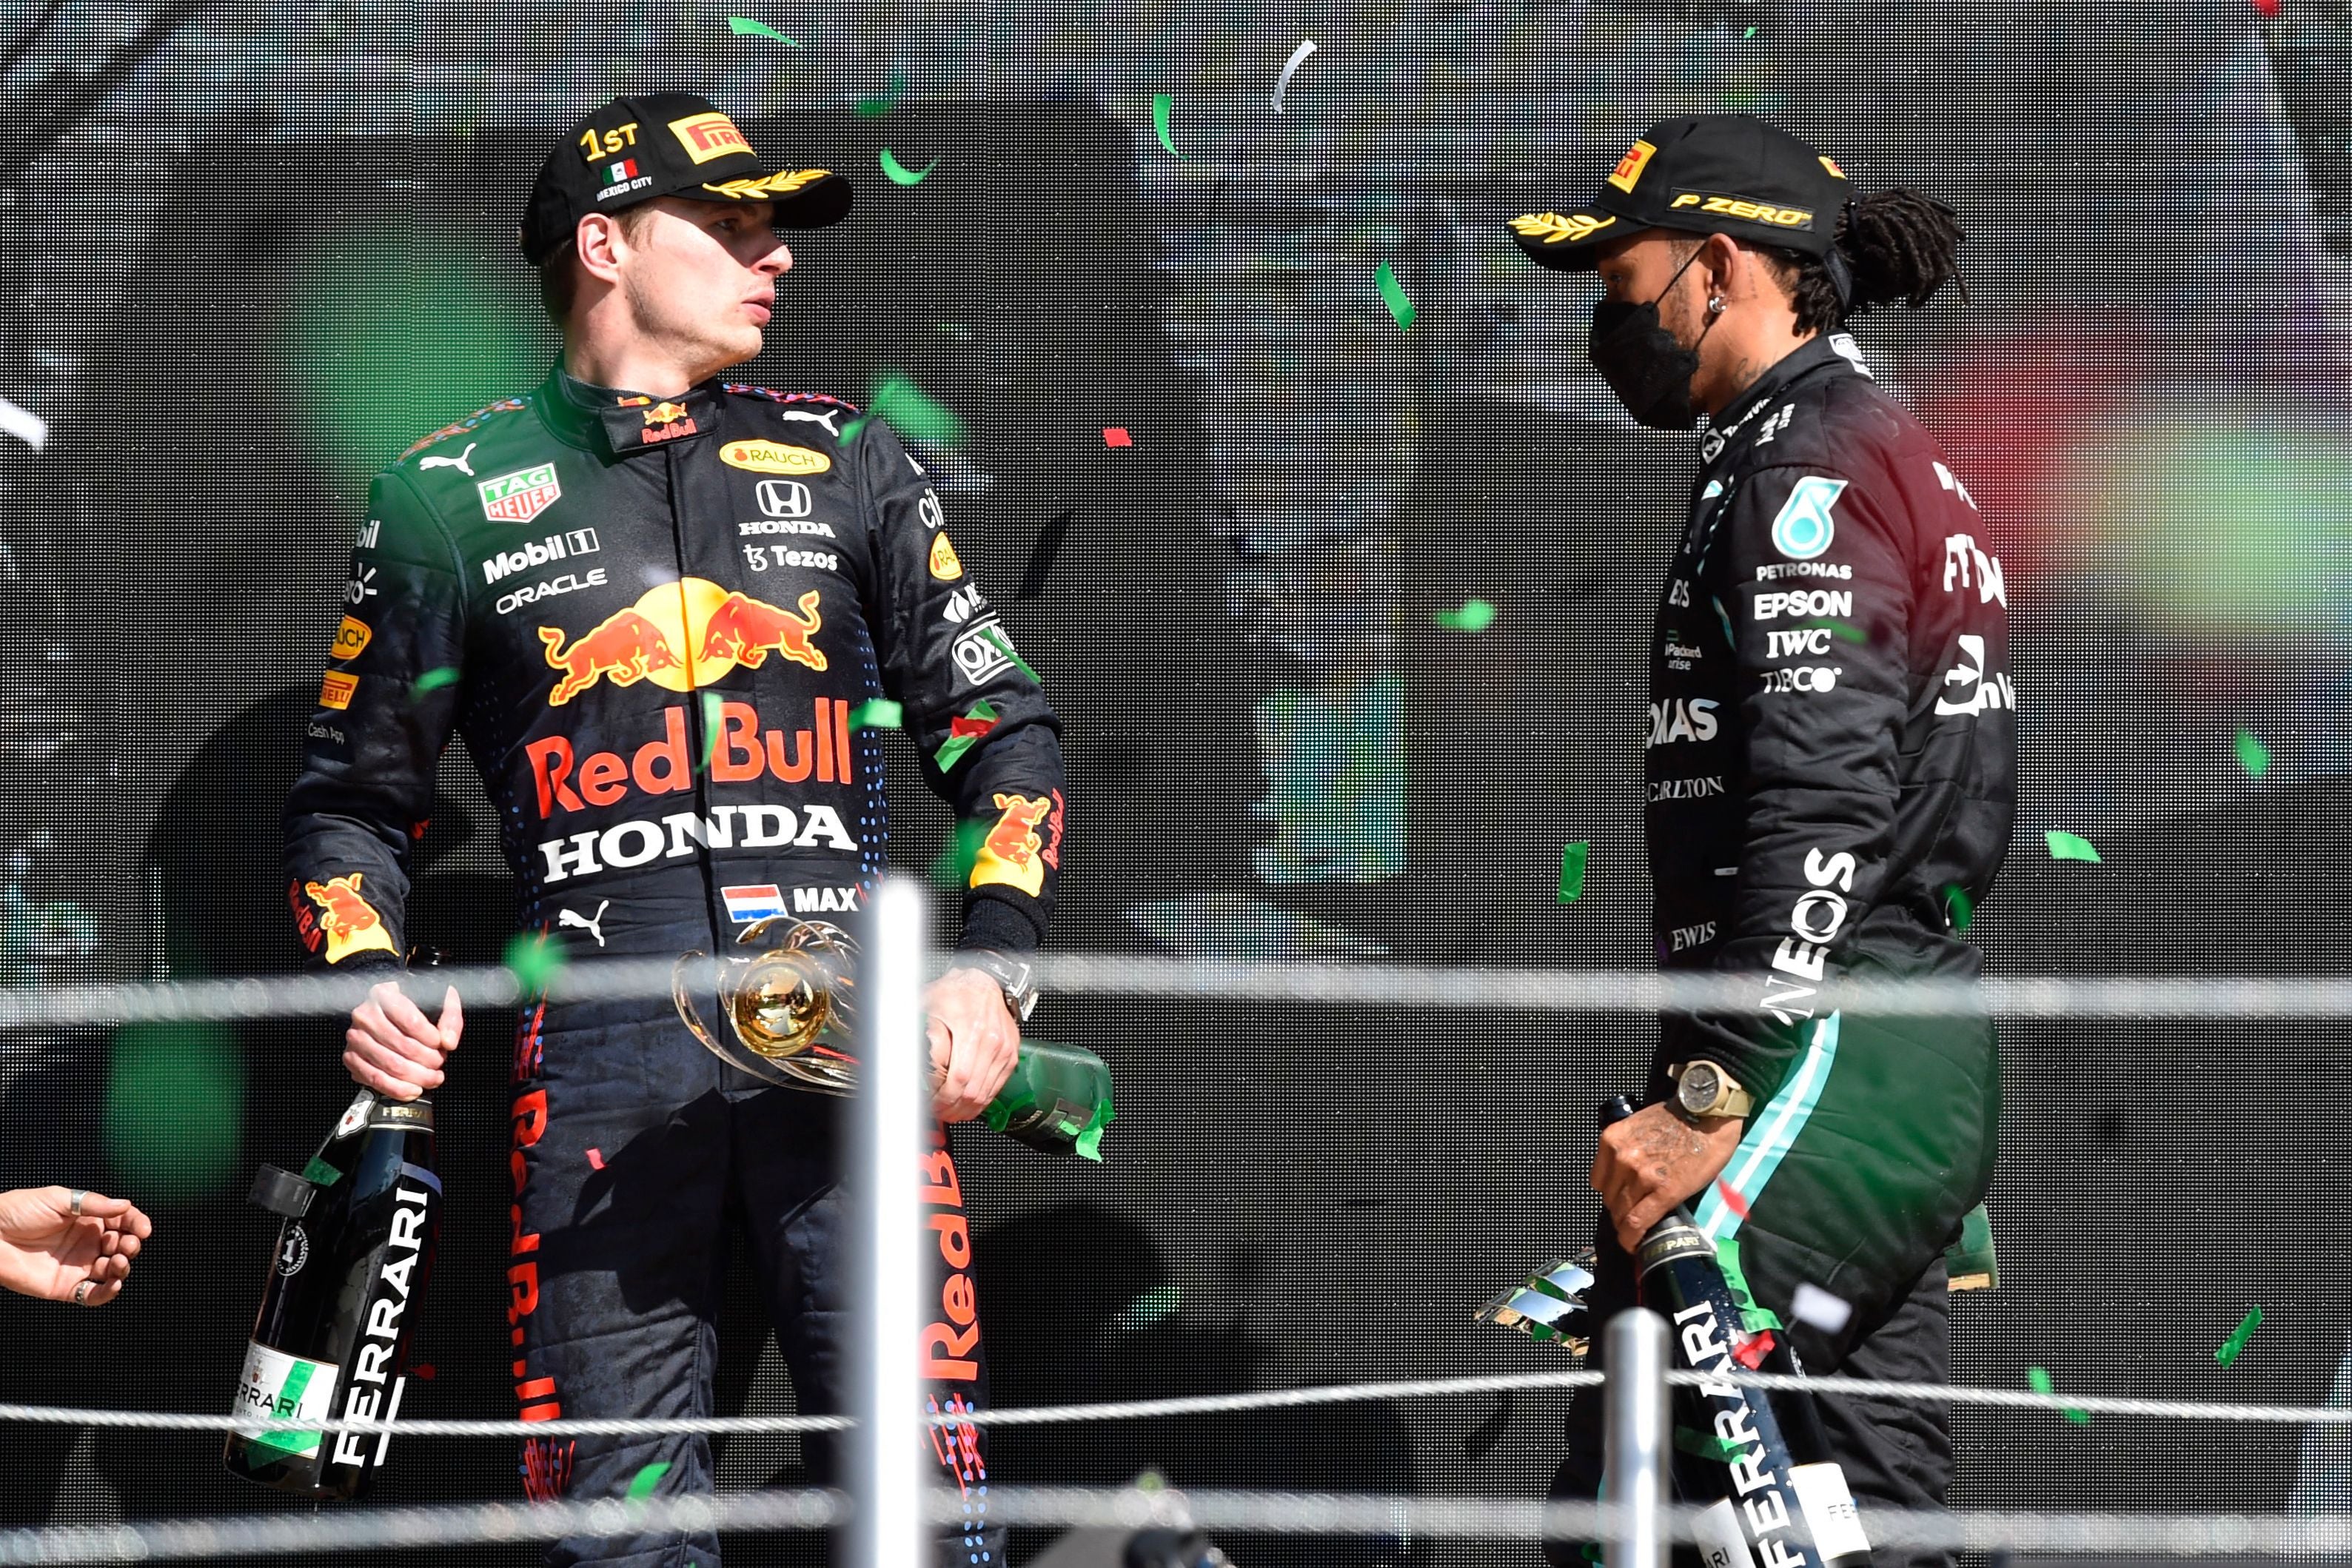 Max Verstappen (left) leads Lewis Hamilton by 19 points